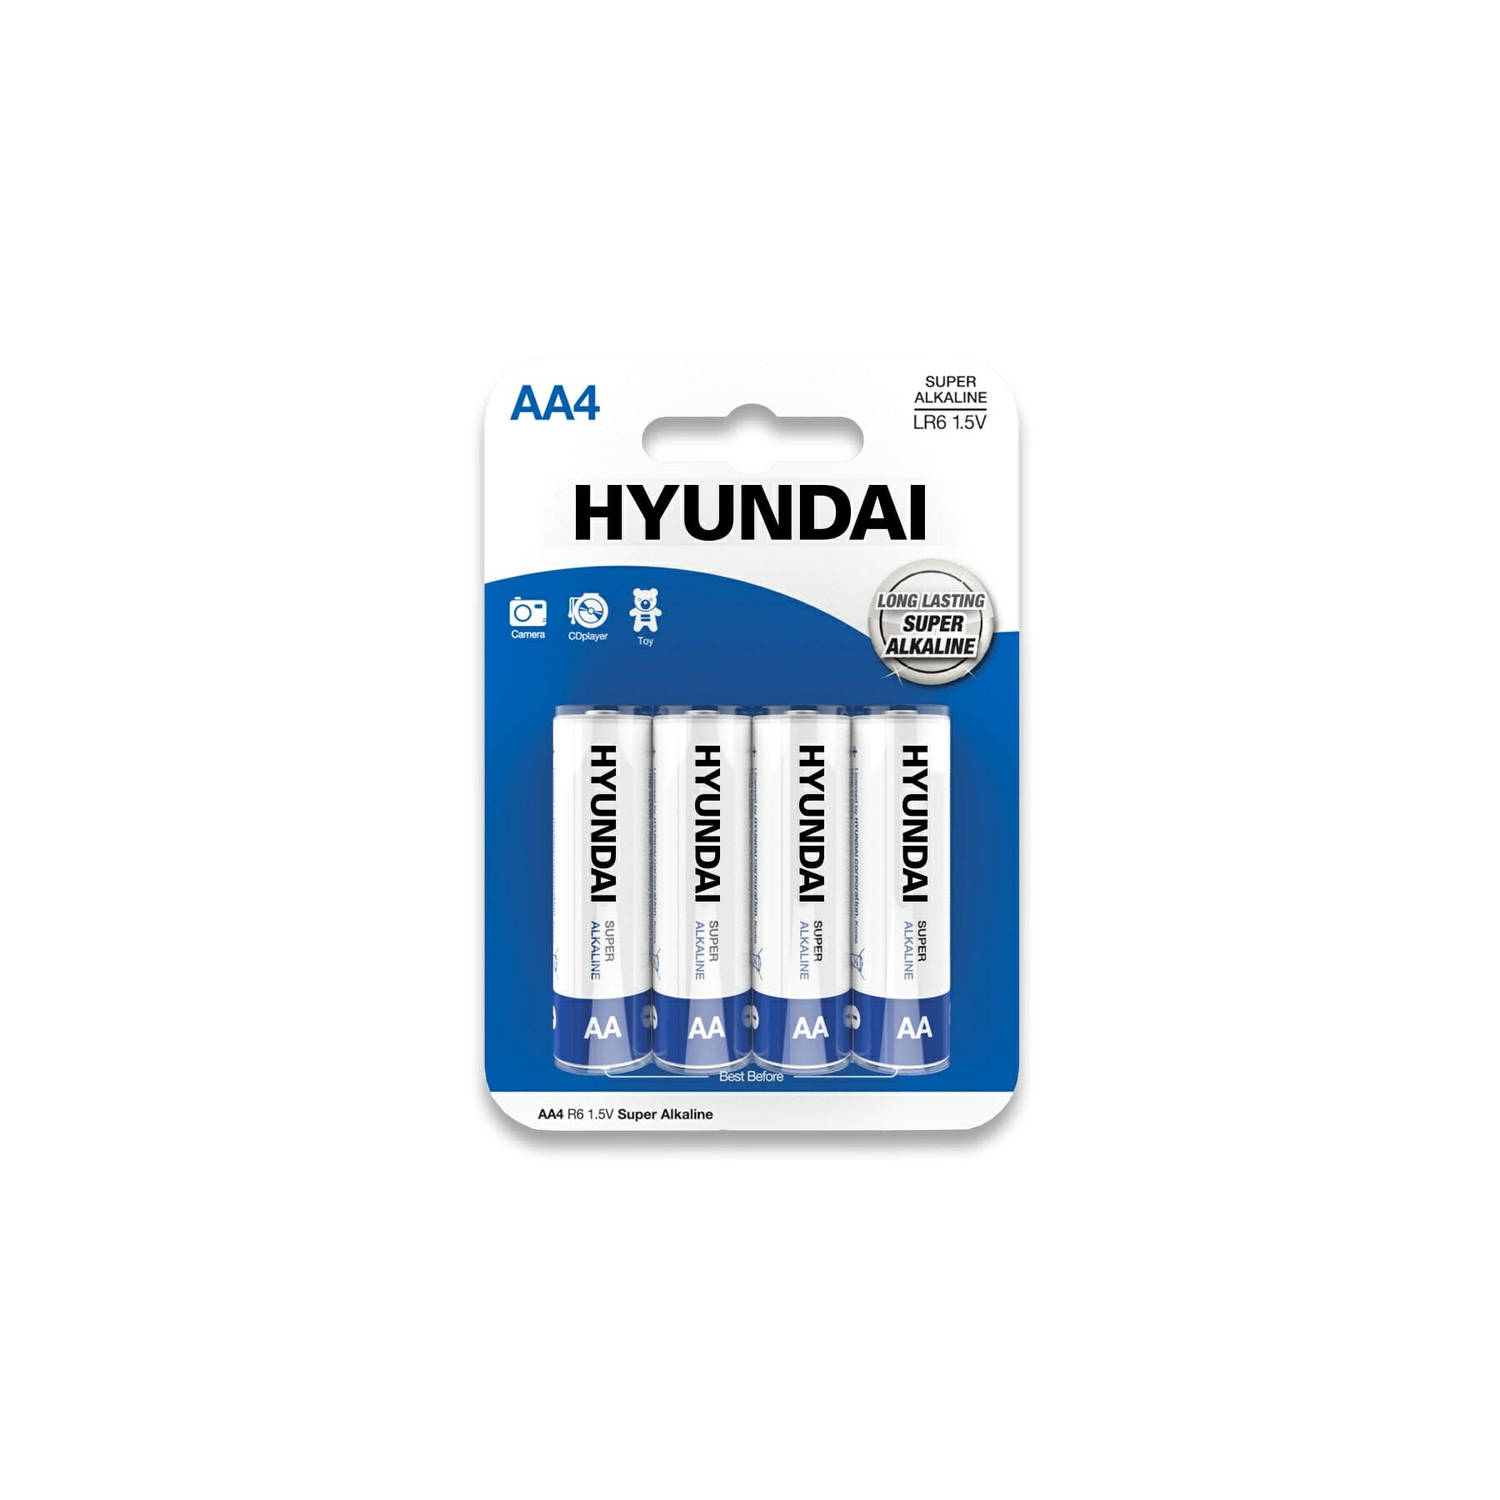 Hyundai Batteries - Super Alkaline AA batterijen - 4 stuks